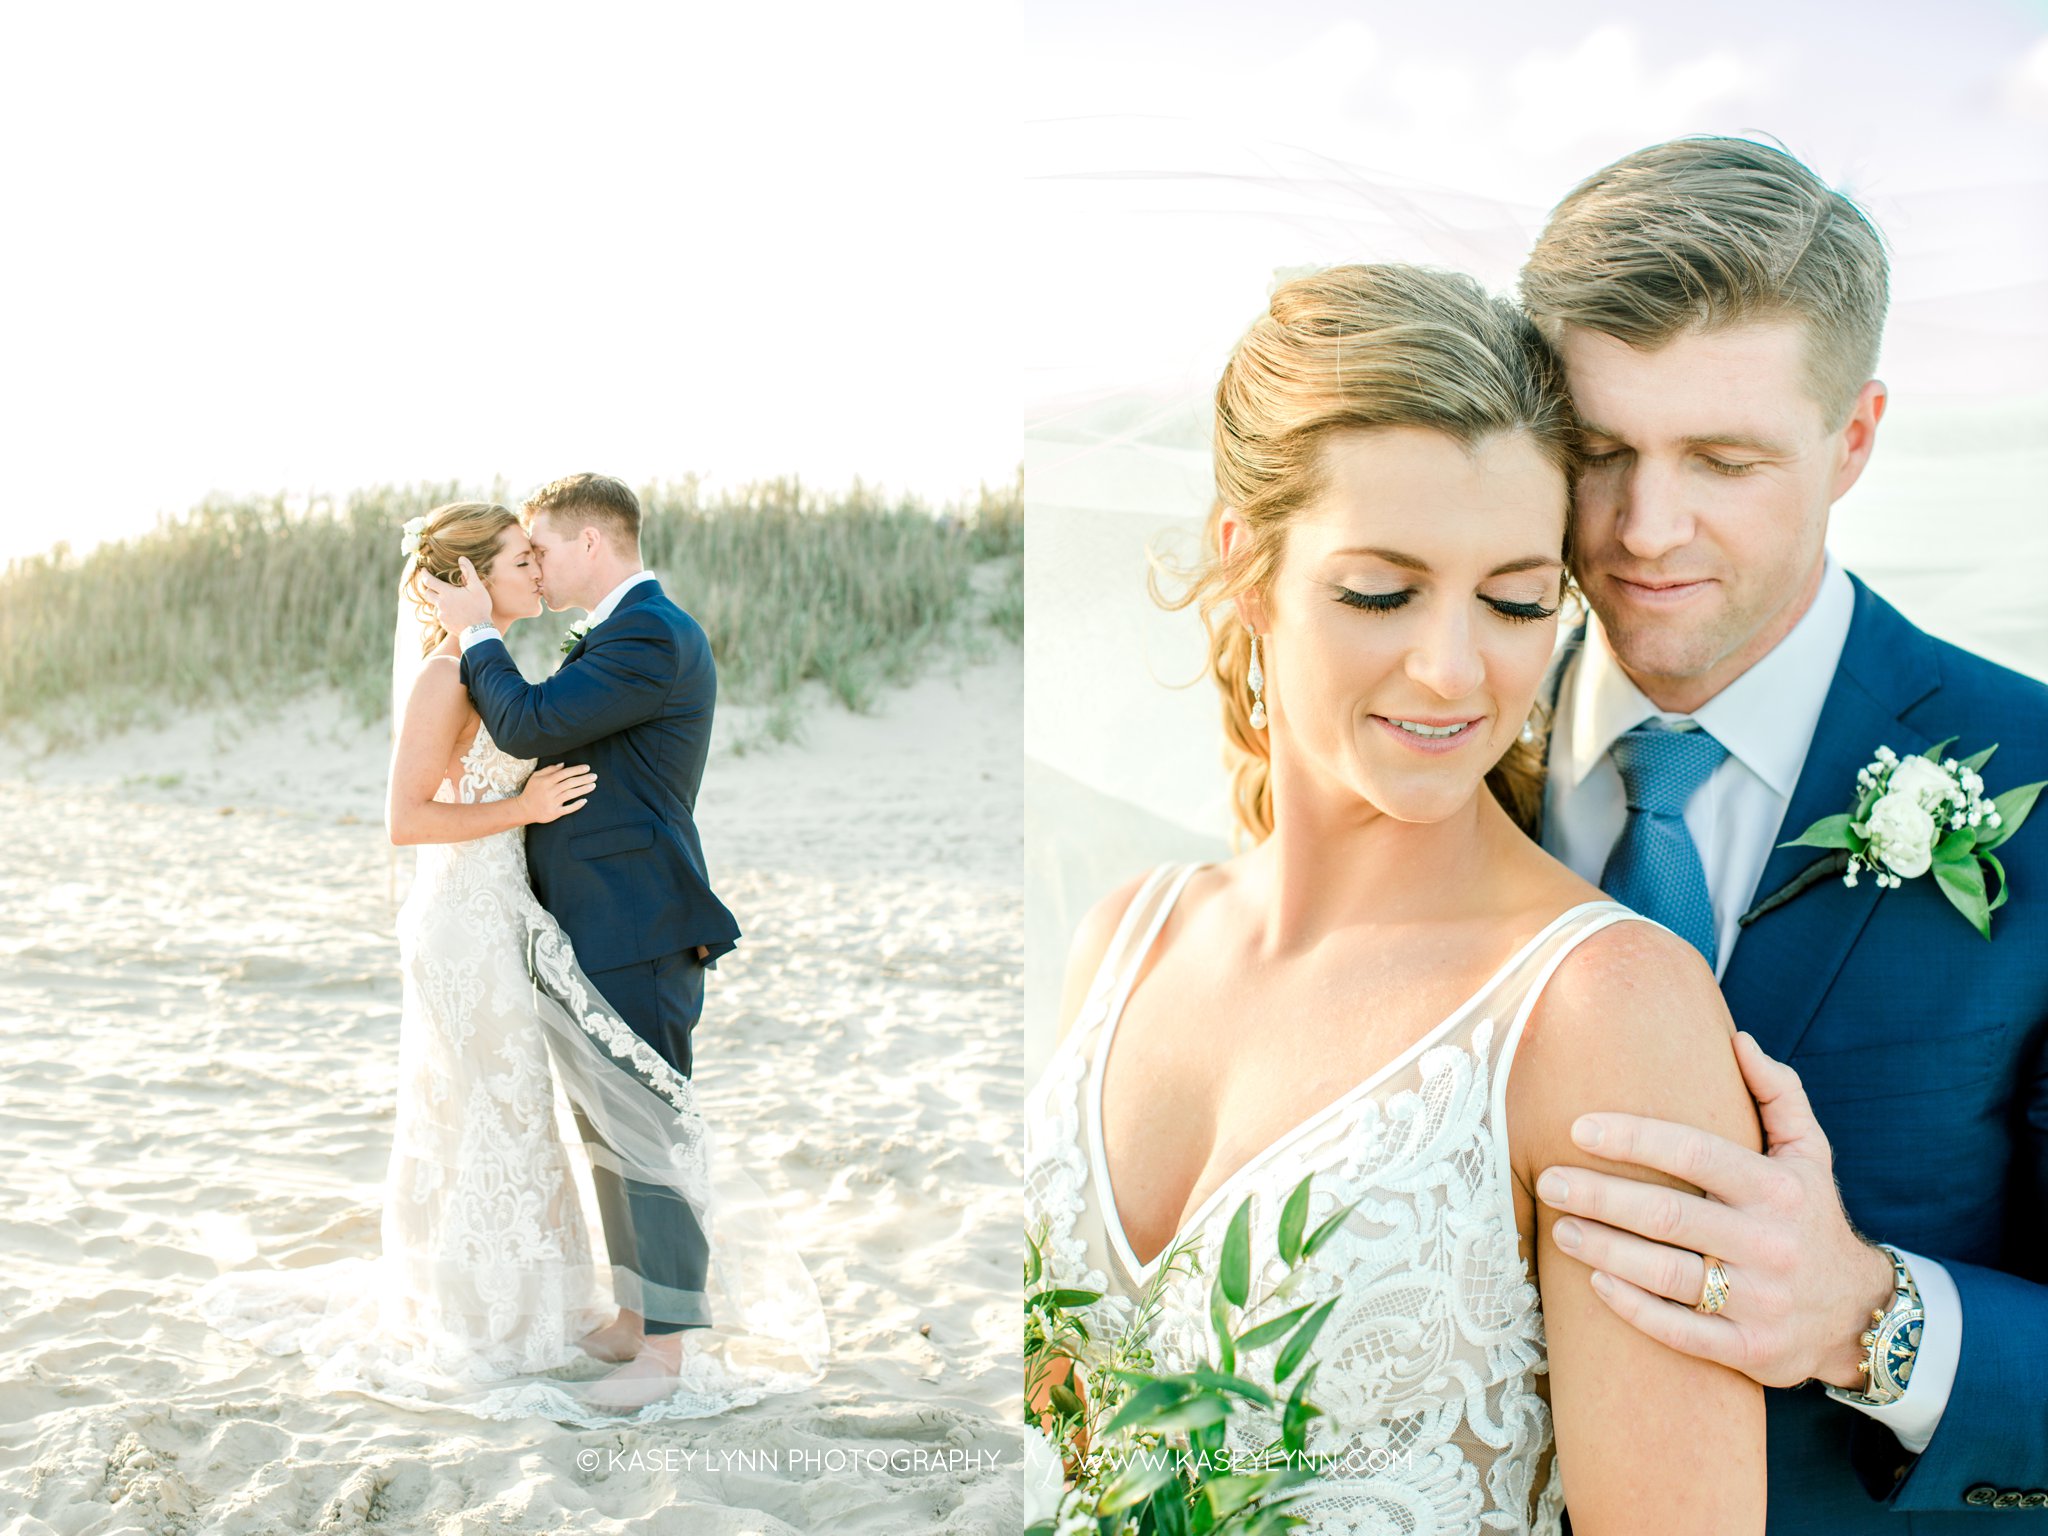 Galveston Wedding Photographer / Kasey Lynn Photography